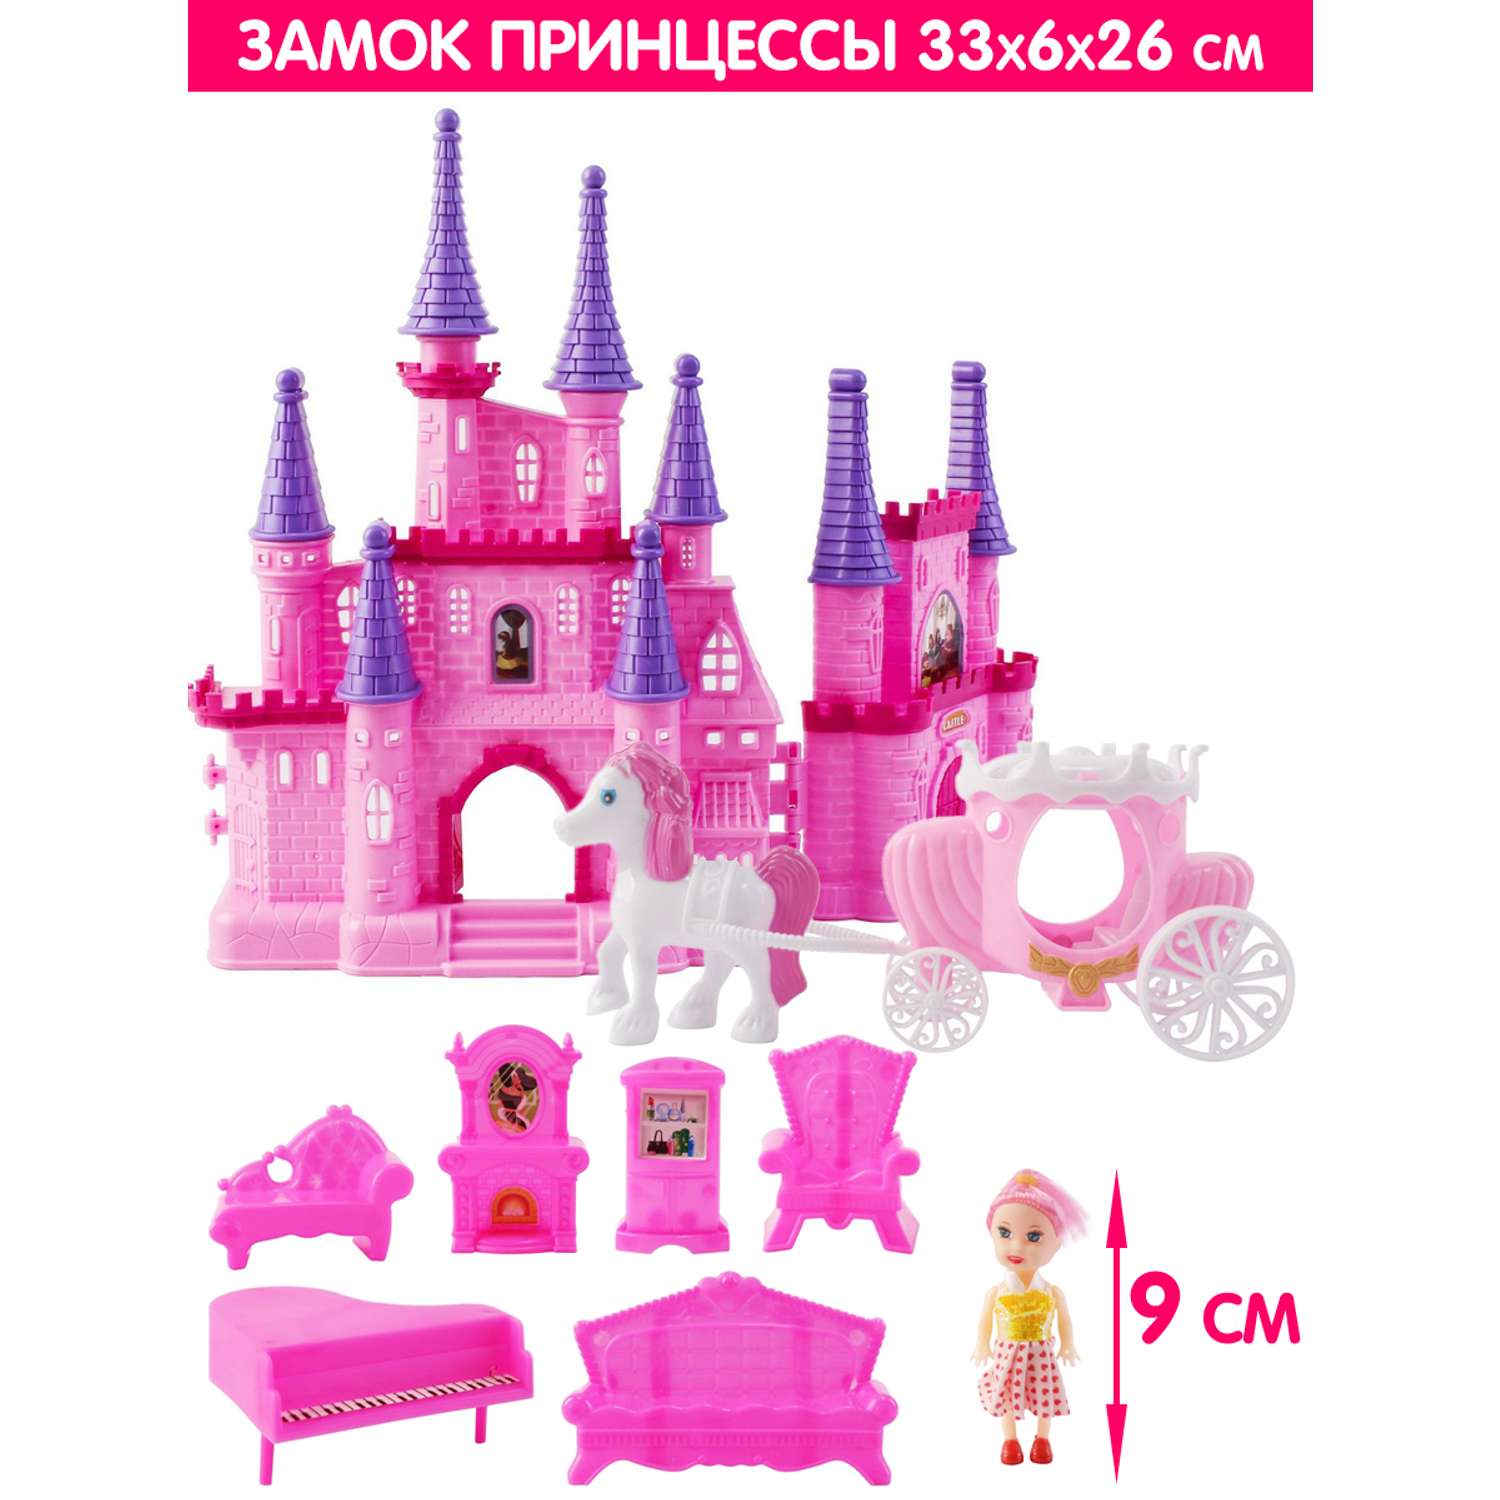 Замок принцессы DollyToy 33х5х26 см кукла 9 см карета лошадь мебель розовый DOL0803-102 - фото 1